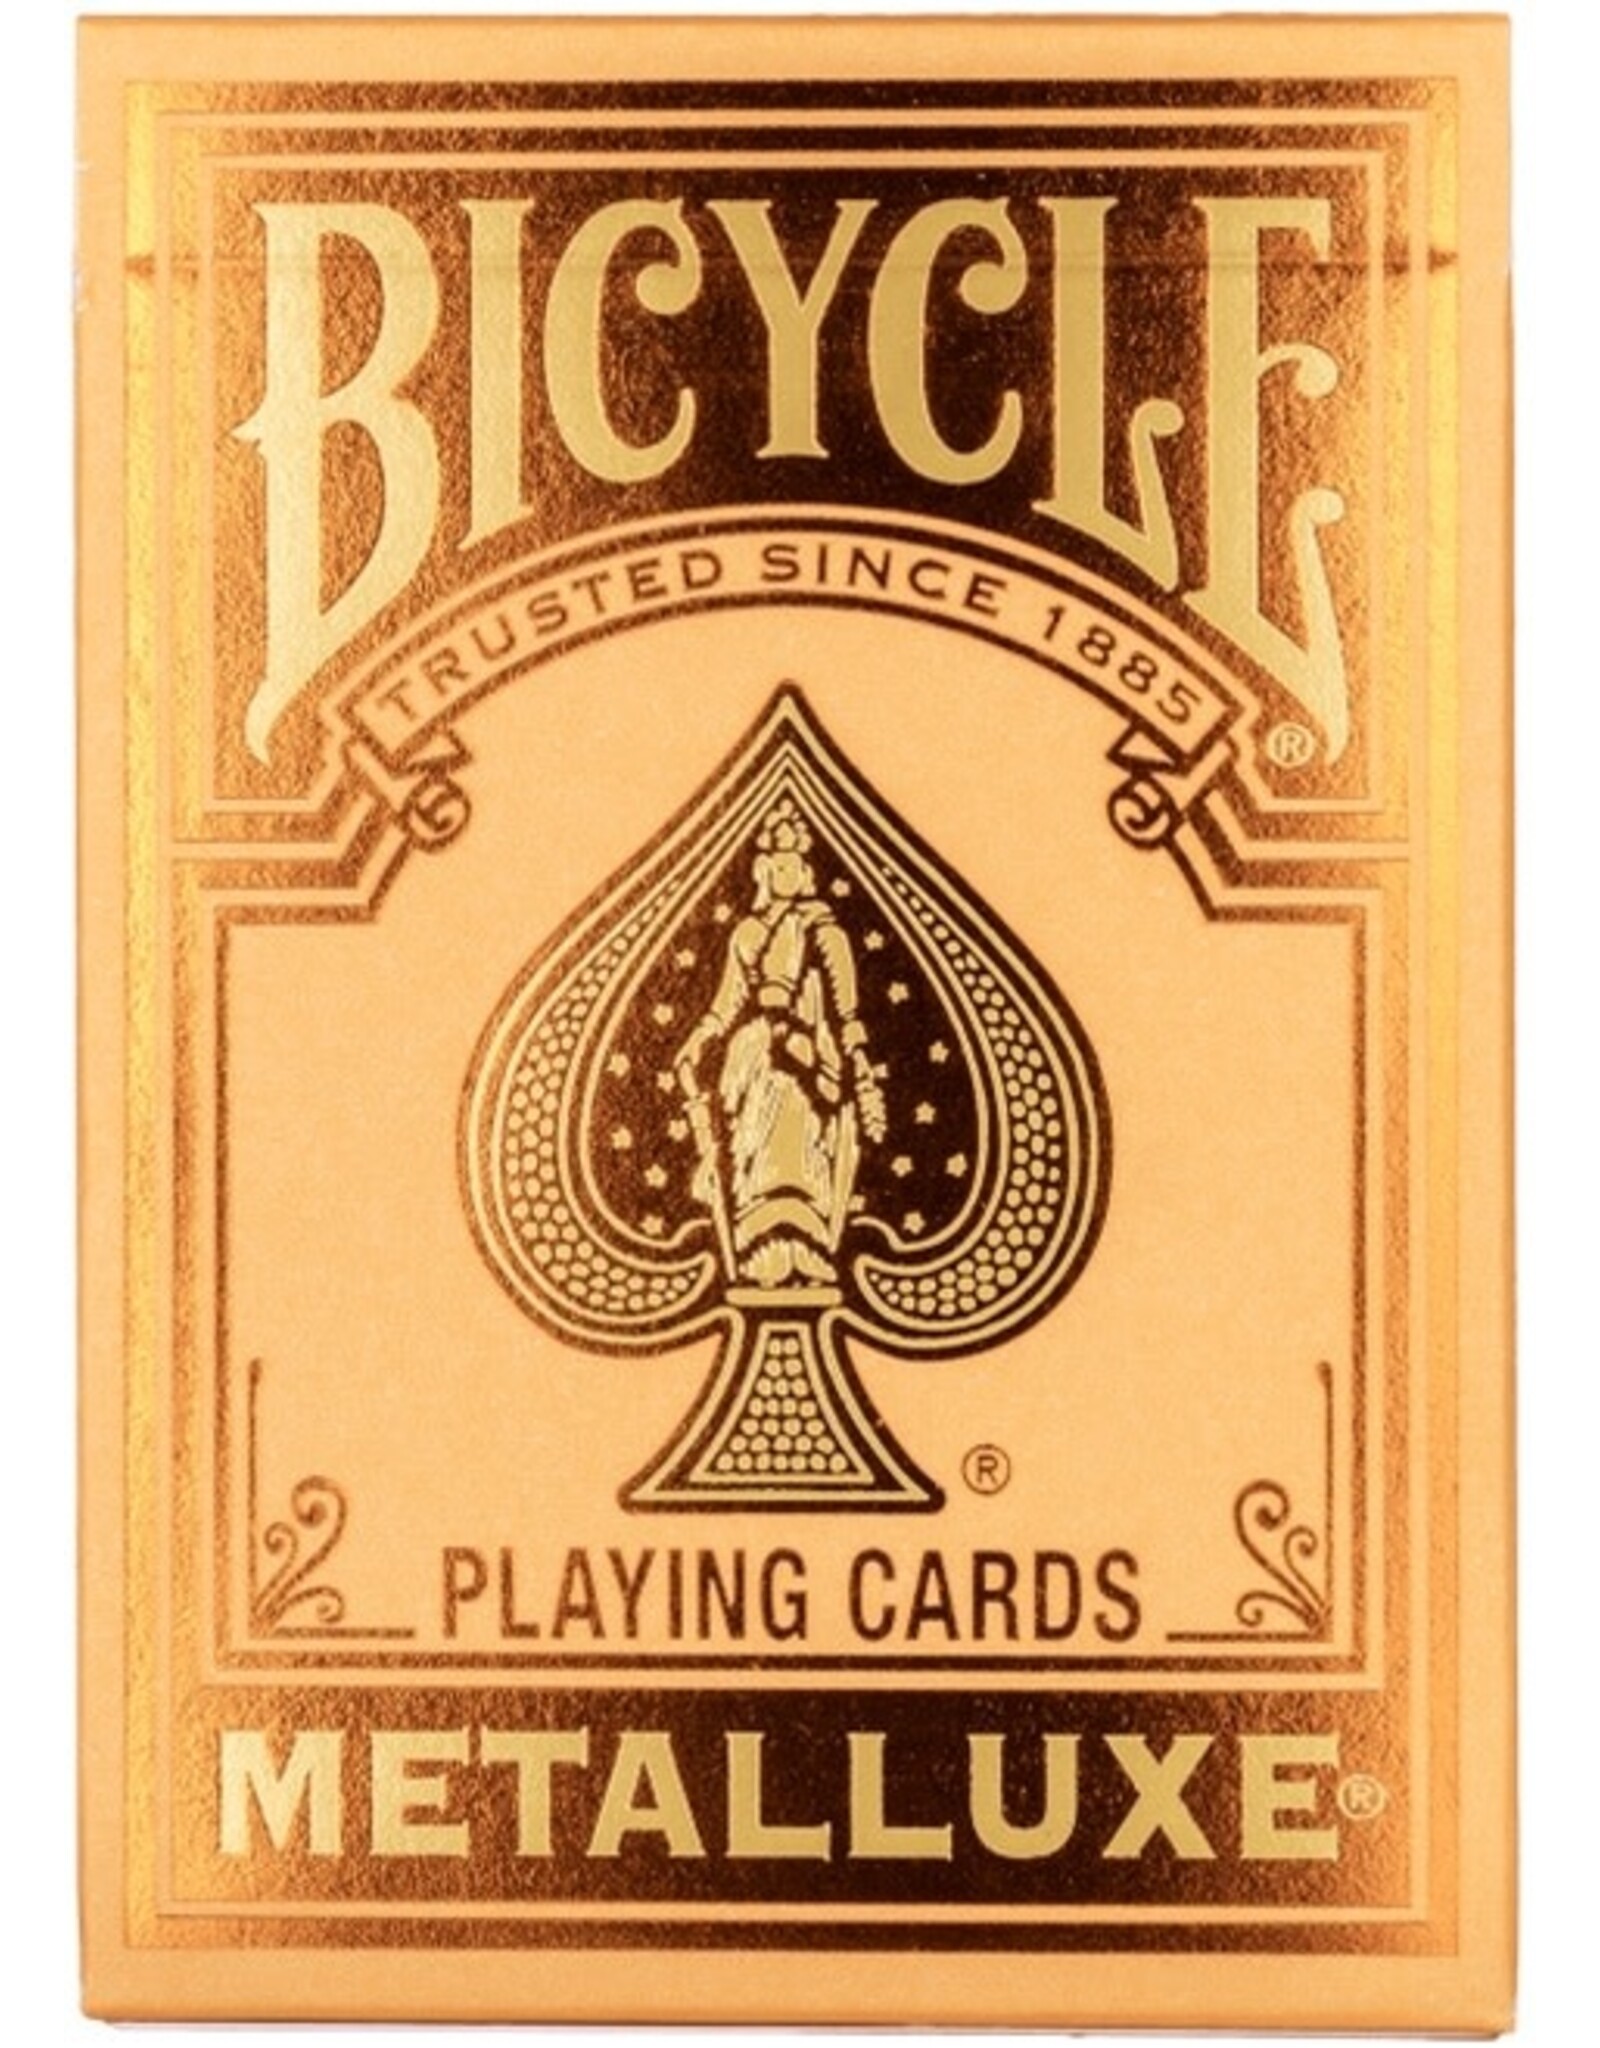 Bicycle Bicycle - Metalluxe Orange